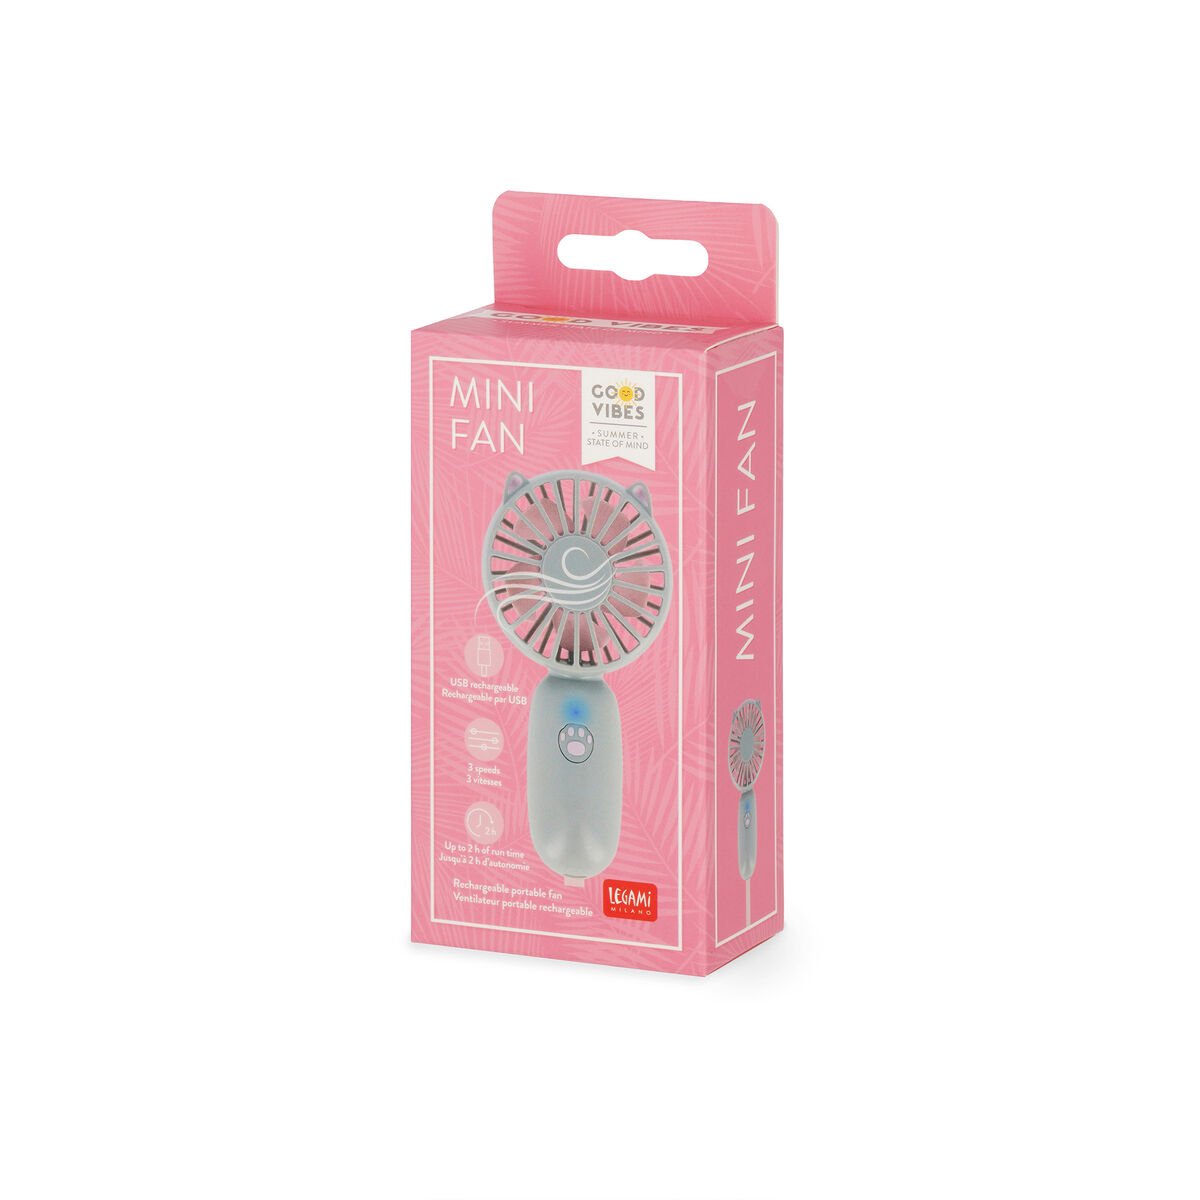 Ventilatore Portatile Ricaricabile - Mini Fan, , zoo